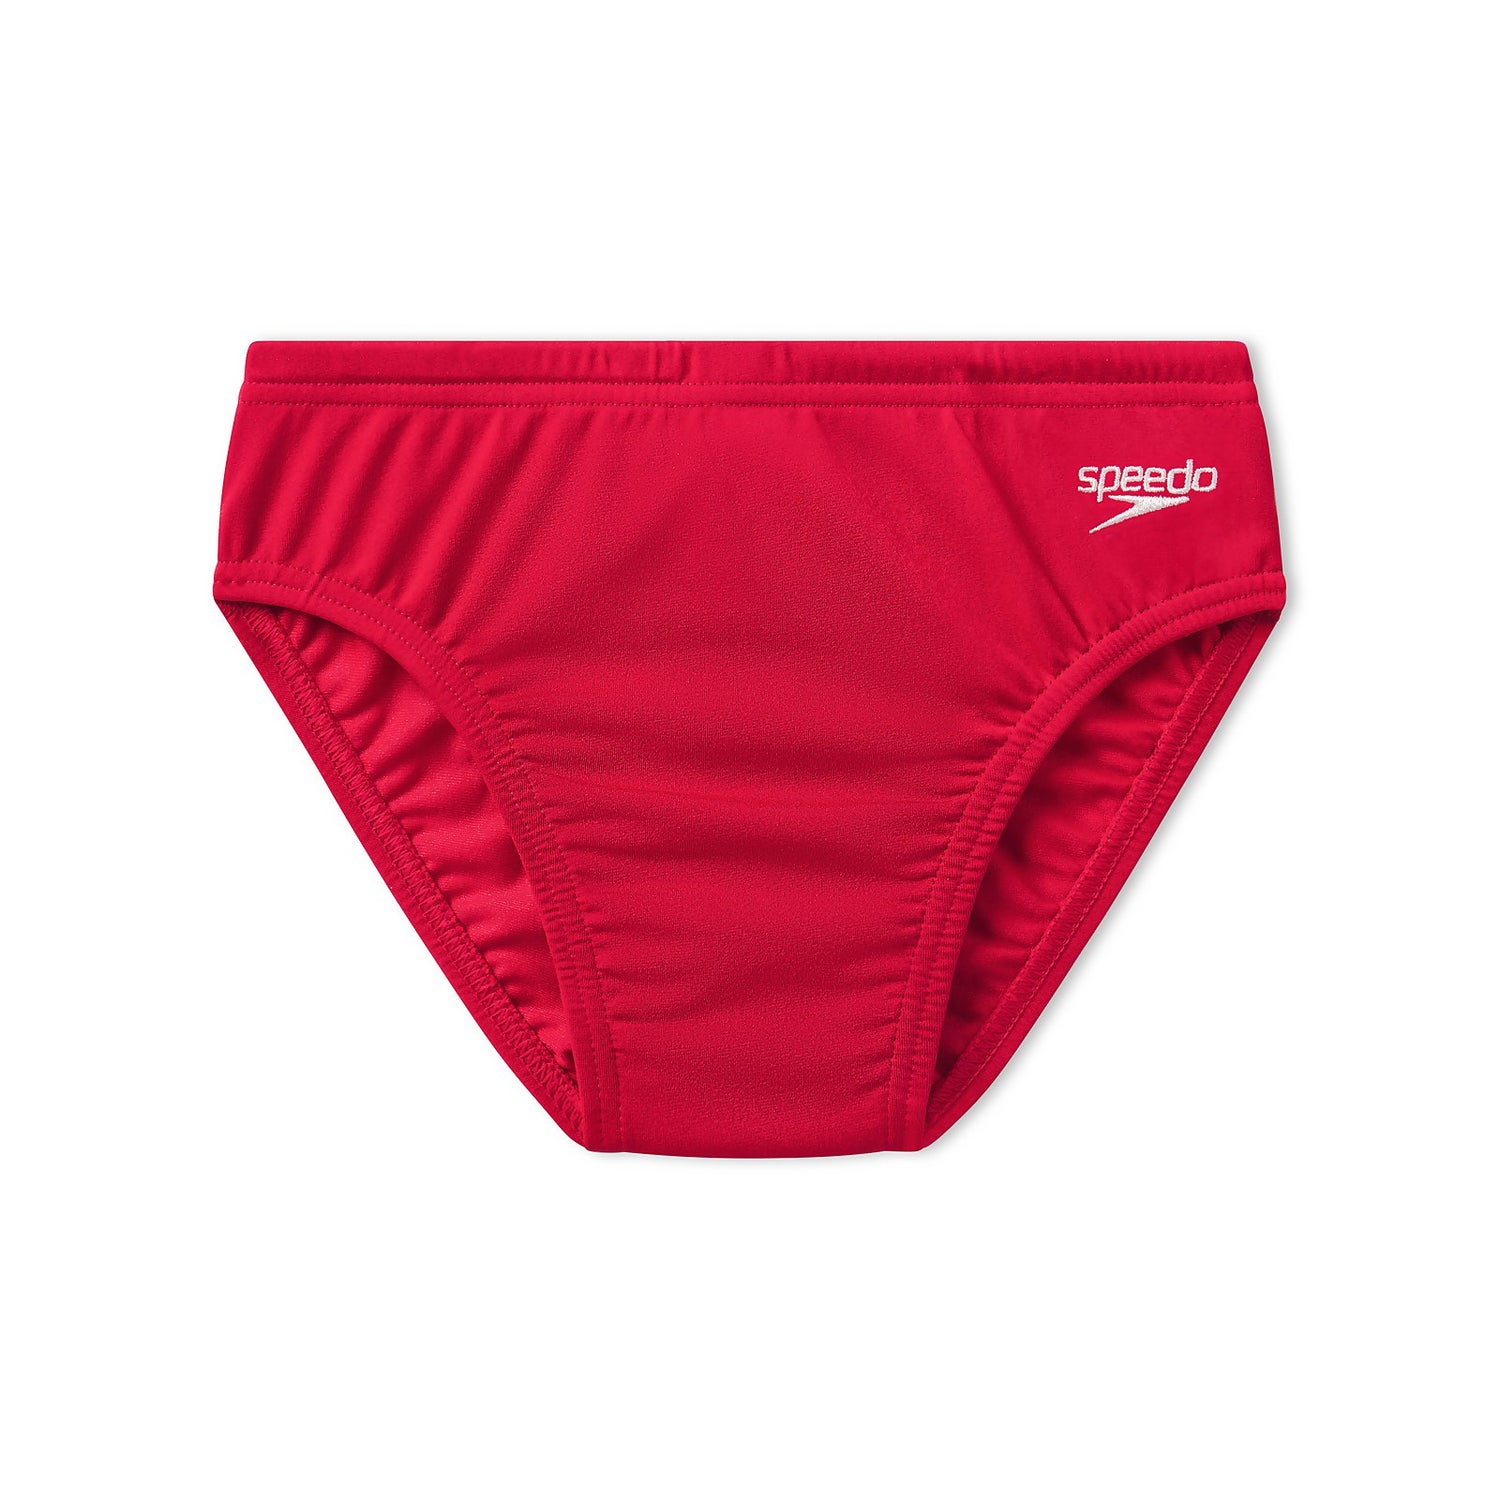 Briefs Male Panties Skin-friendly Solid Color Underwear Wear-resistant